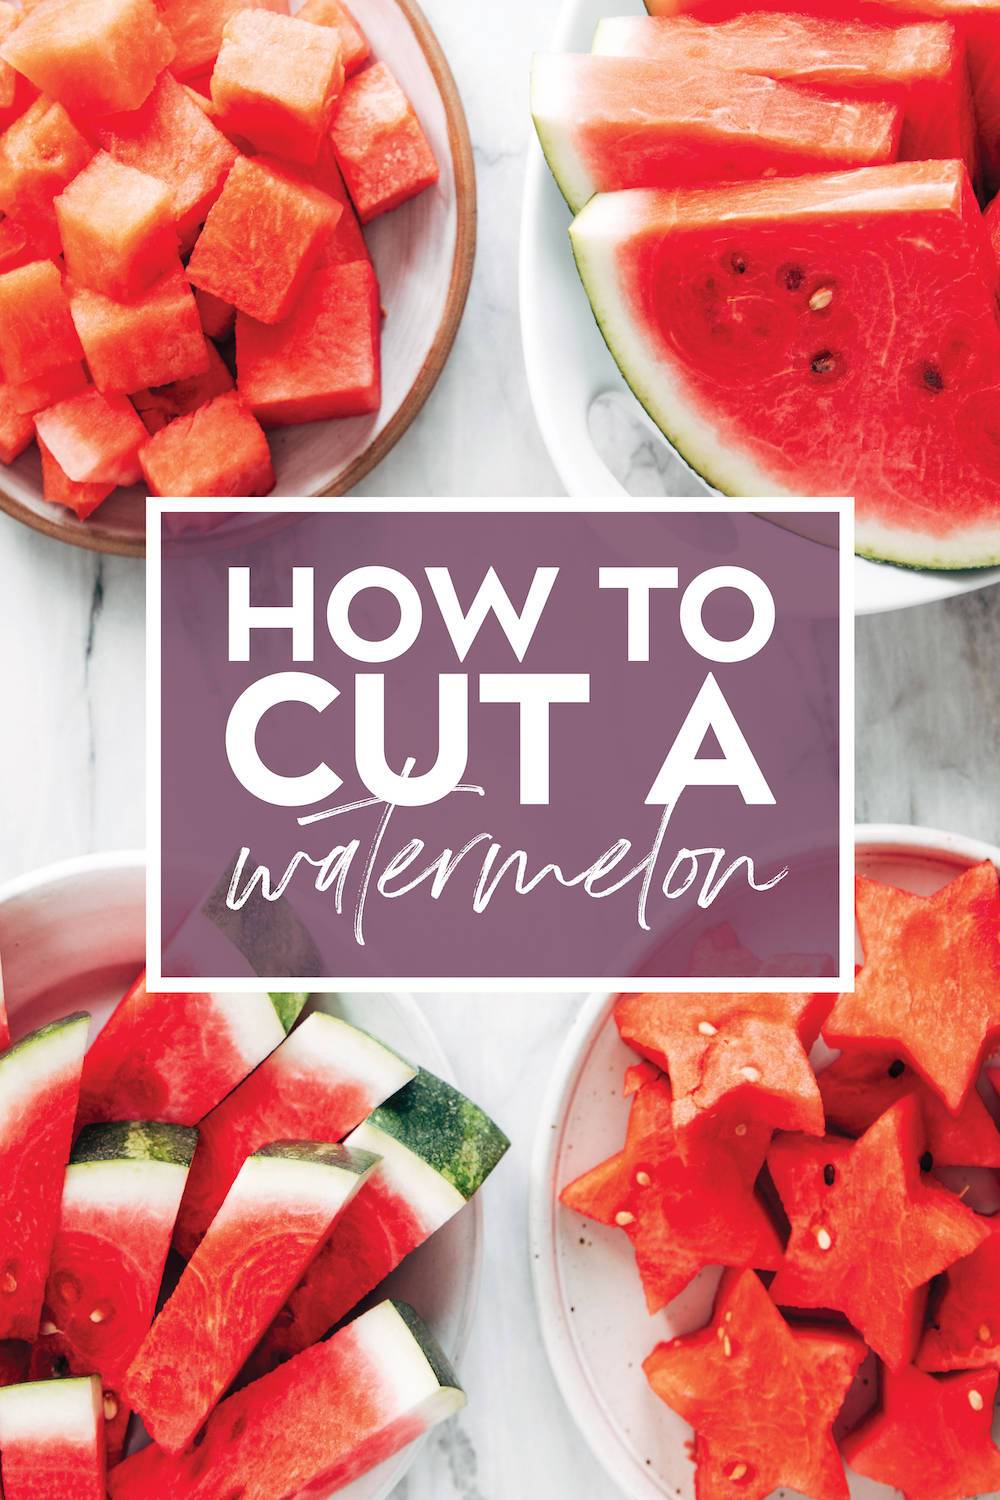 Image of watermelon cut multiple ways